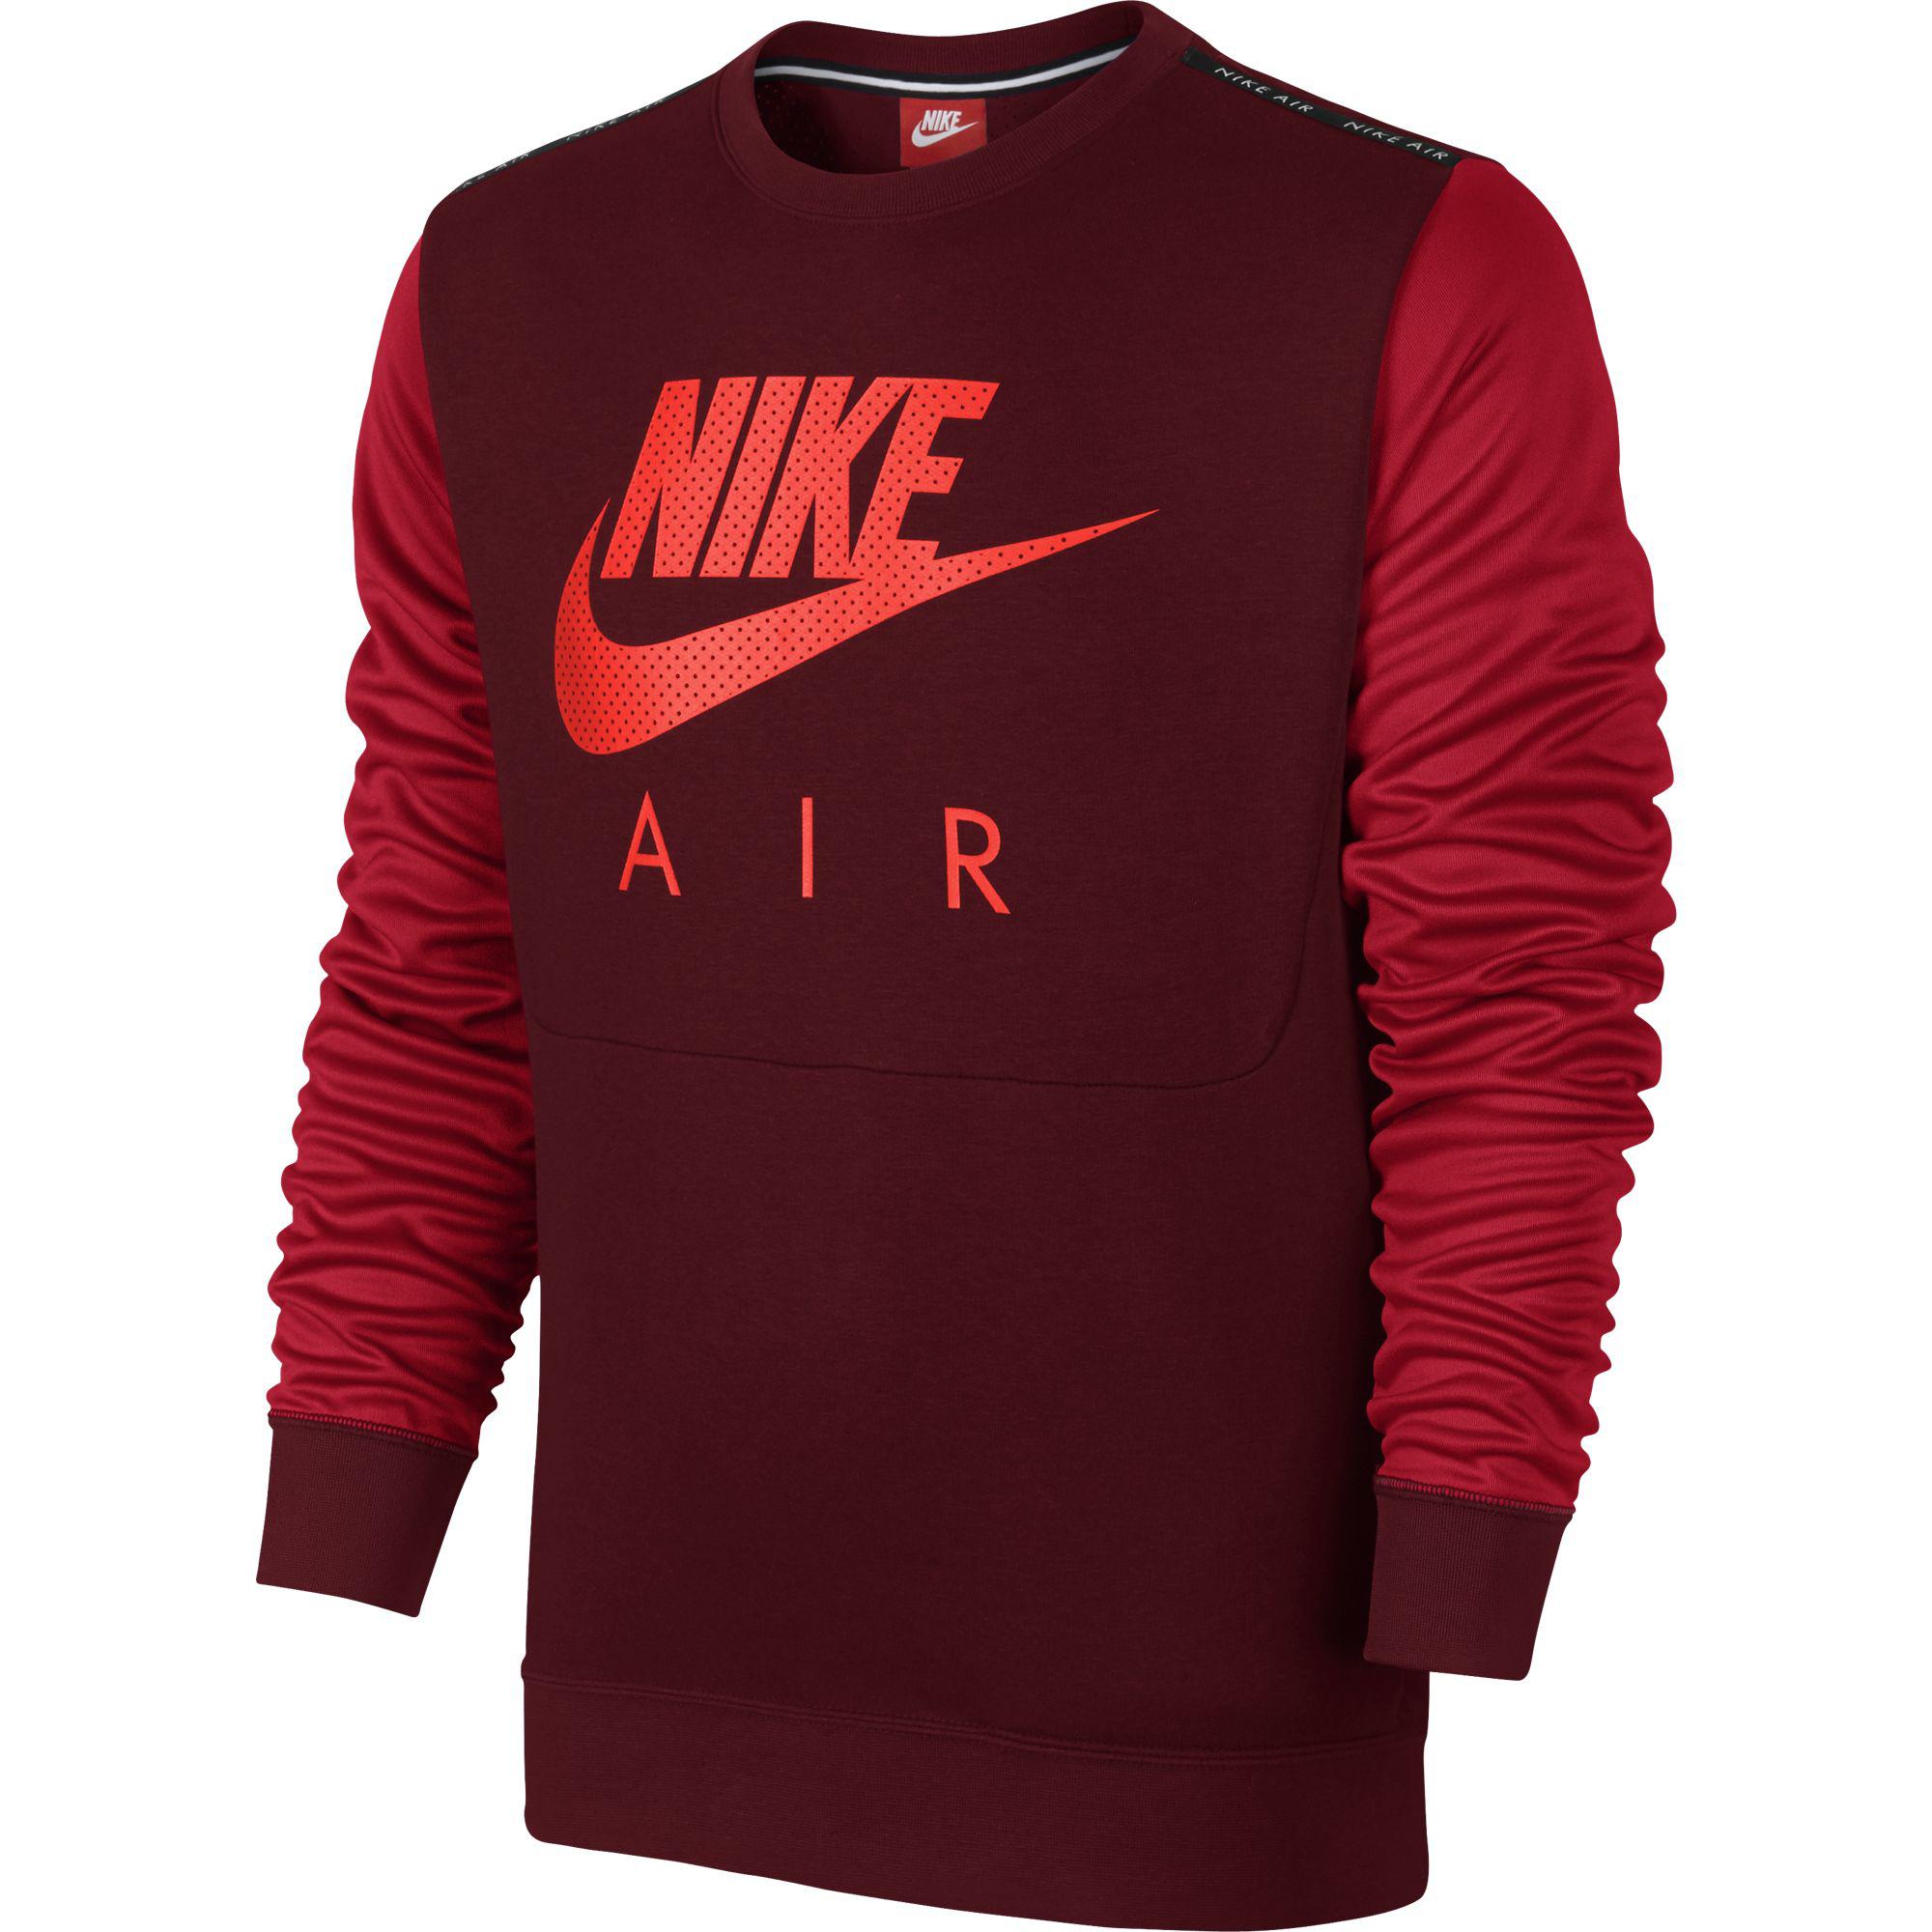 Mixed Red and Black Nike Logo - Nike Mens Air Hybrid Fleece Crew Long Sleeve Top